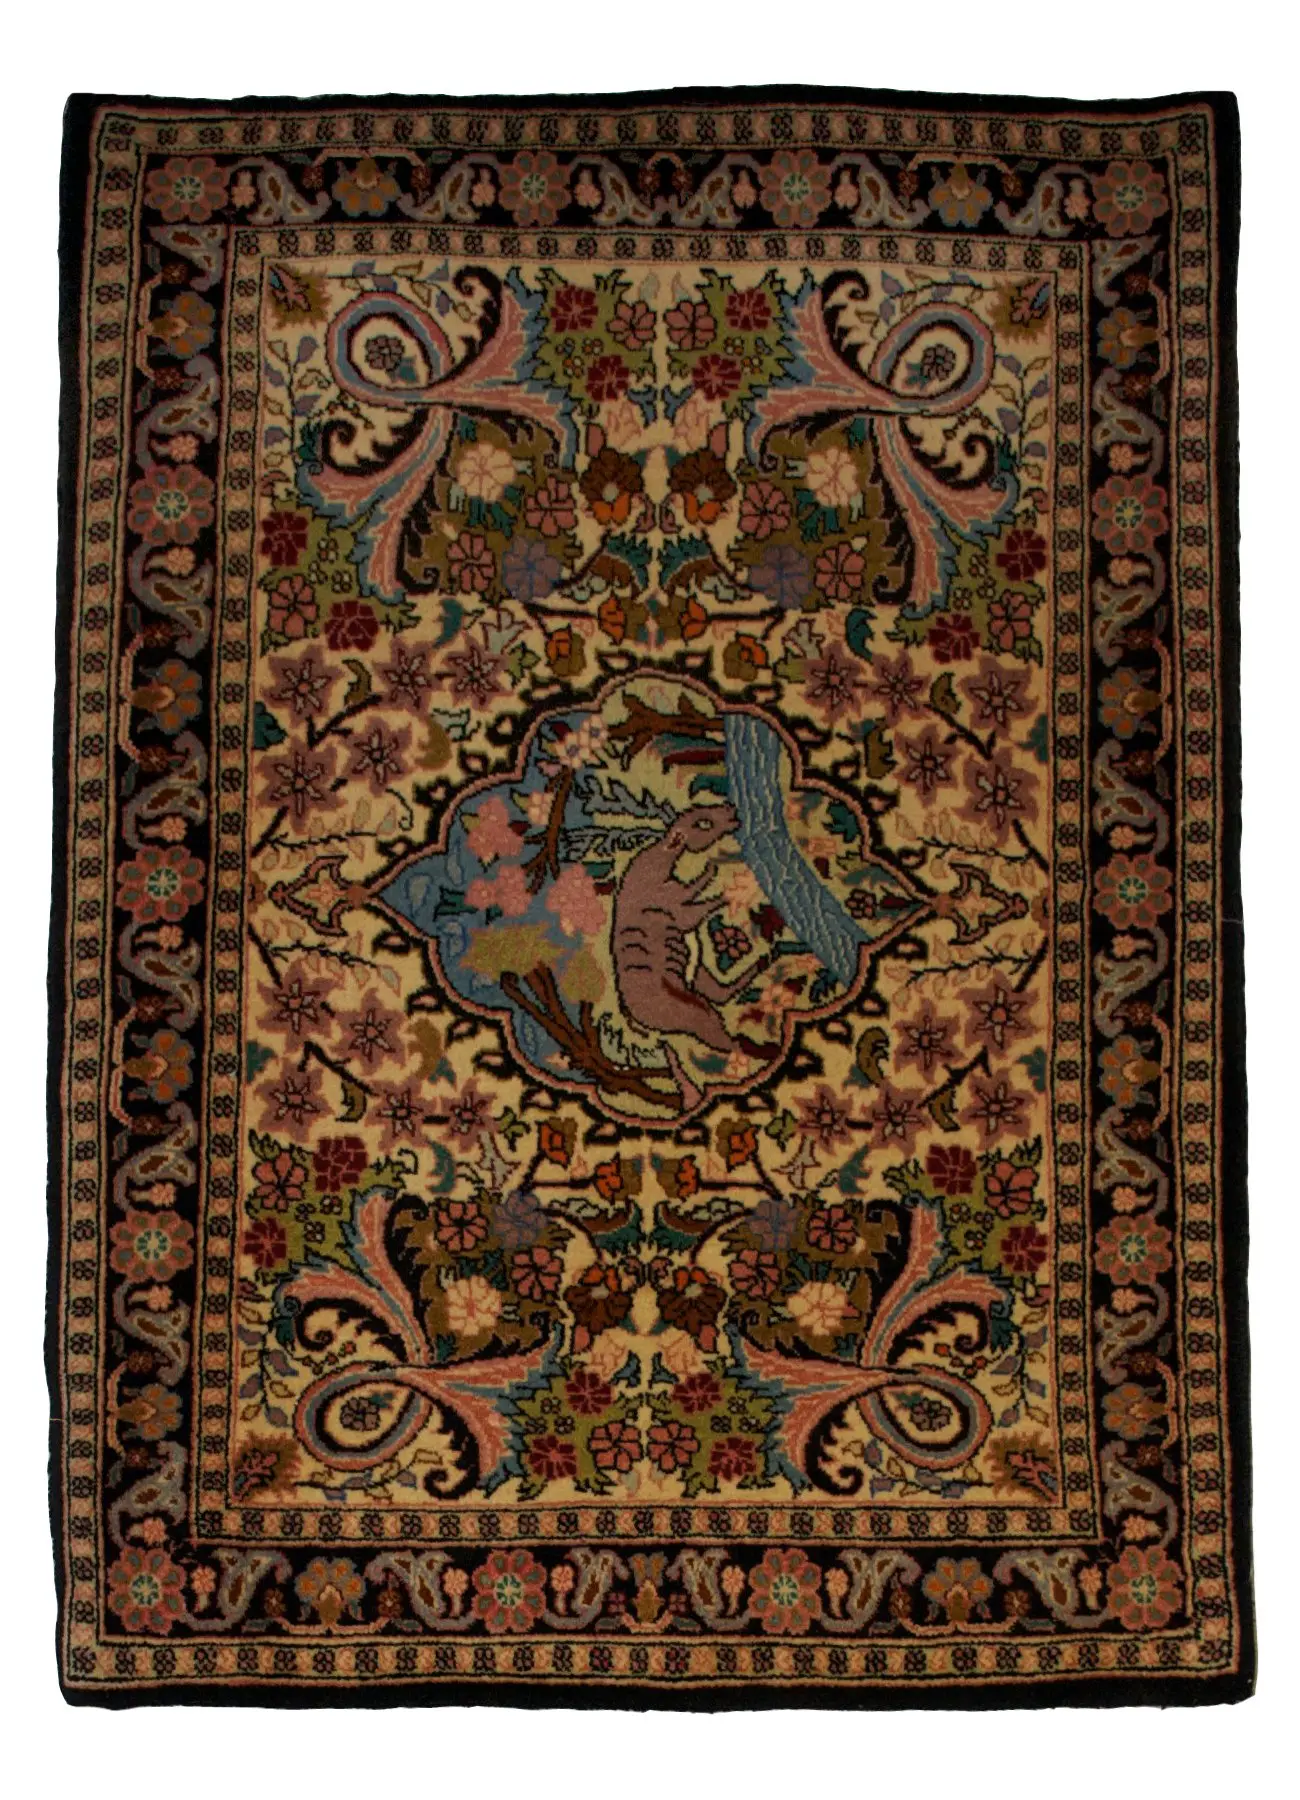 Persian Sarouk 2' 4" x 3' 3" Handmade Area Rug - Shabahang Royal Carpet